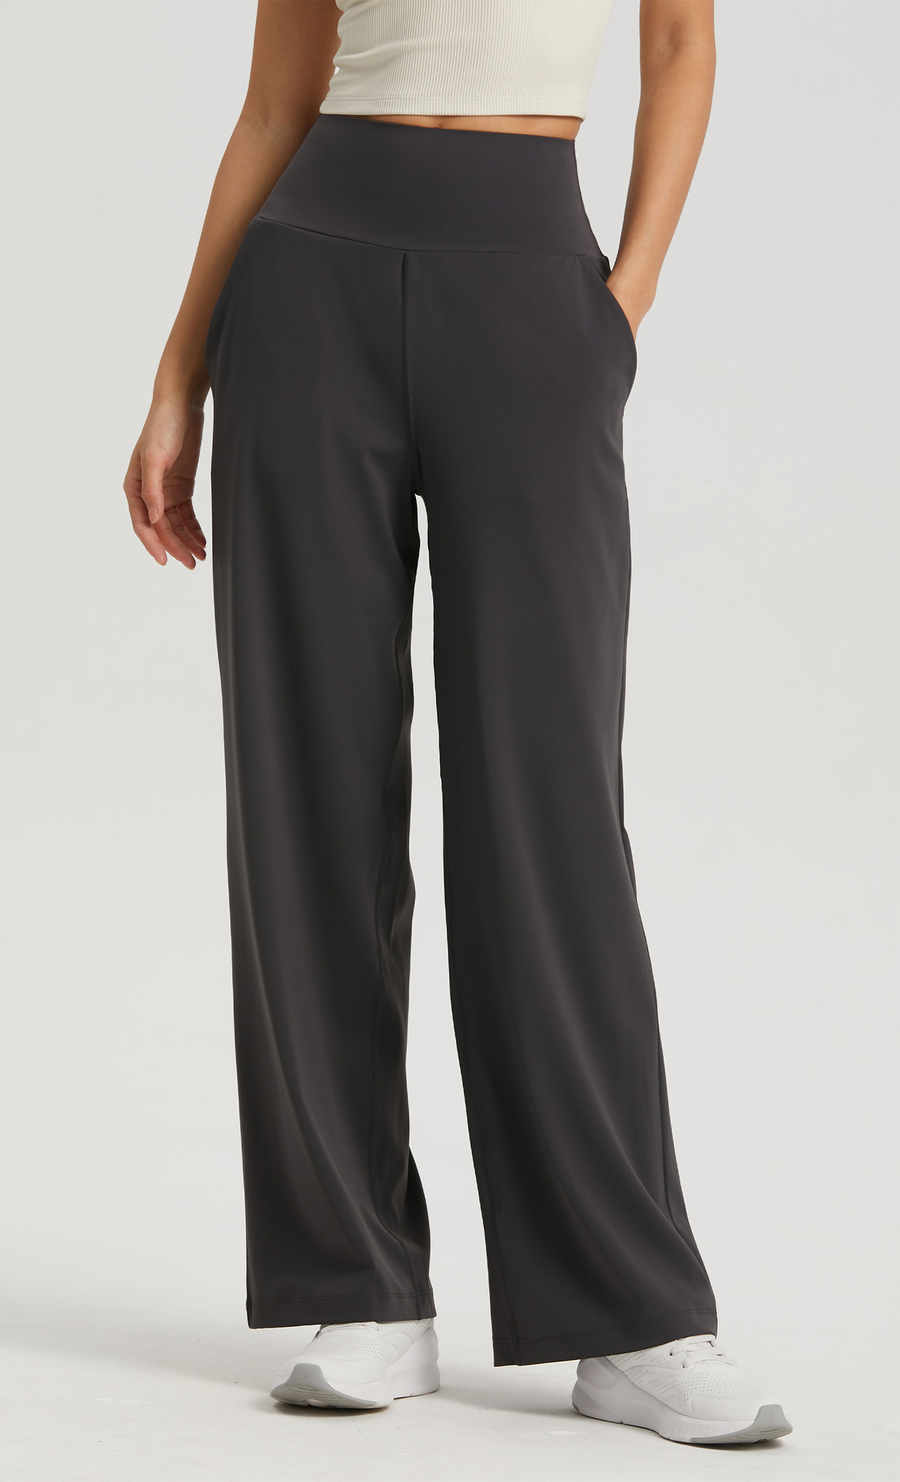 Wide Legged Yoga Pant - Graphite Grey